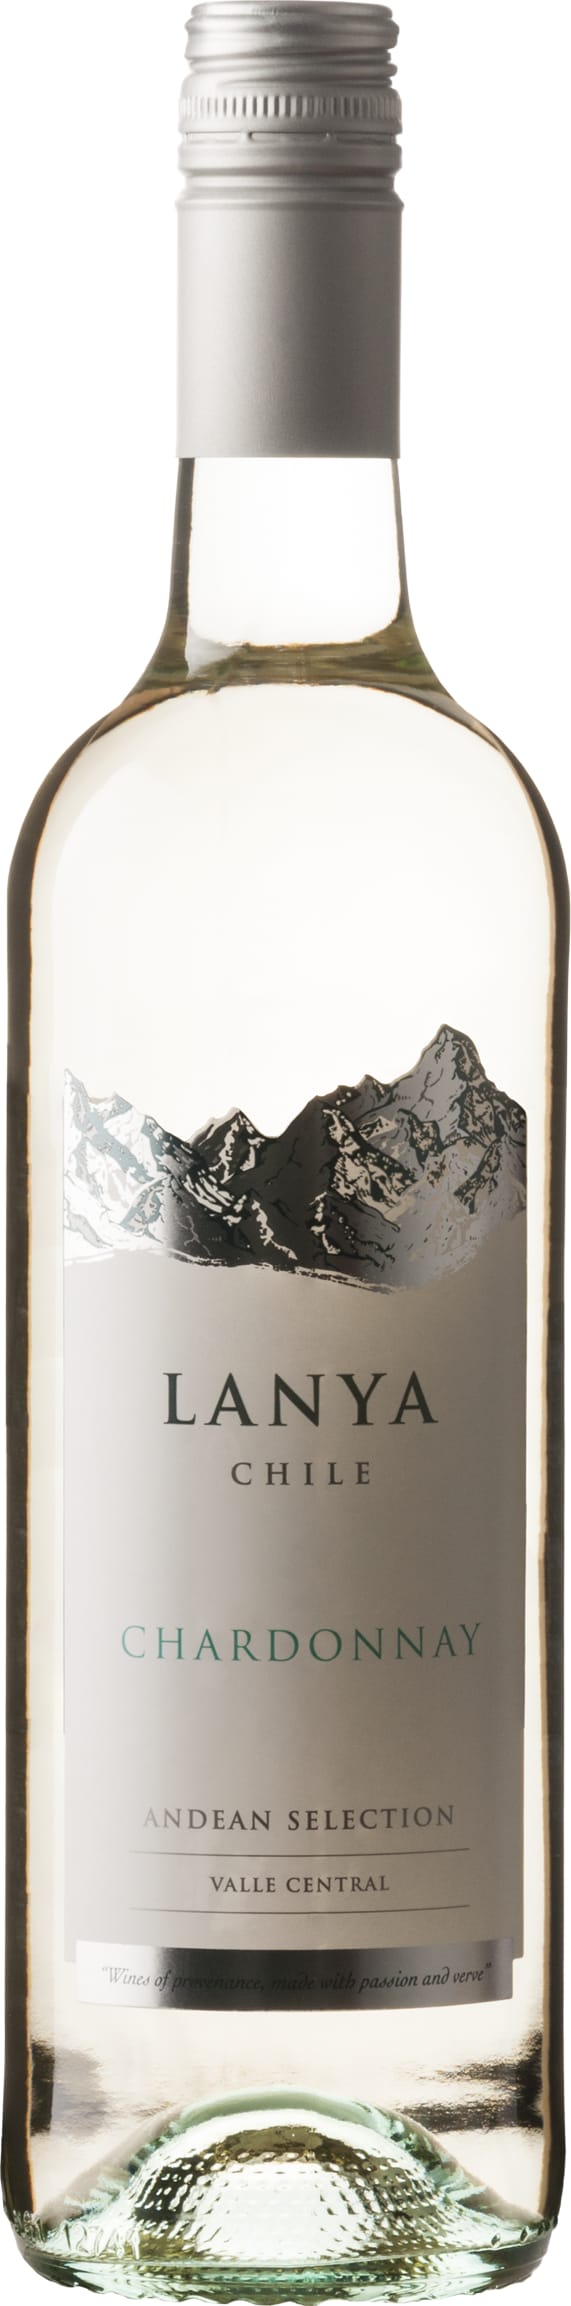 Lanya 2018 Chardonnay, Lanya 2018 75cl - Buy Lanya Wines from GREAT WINES DIRECT wine shop